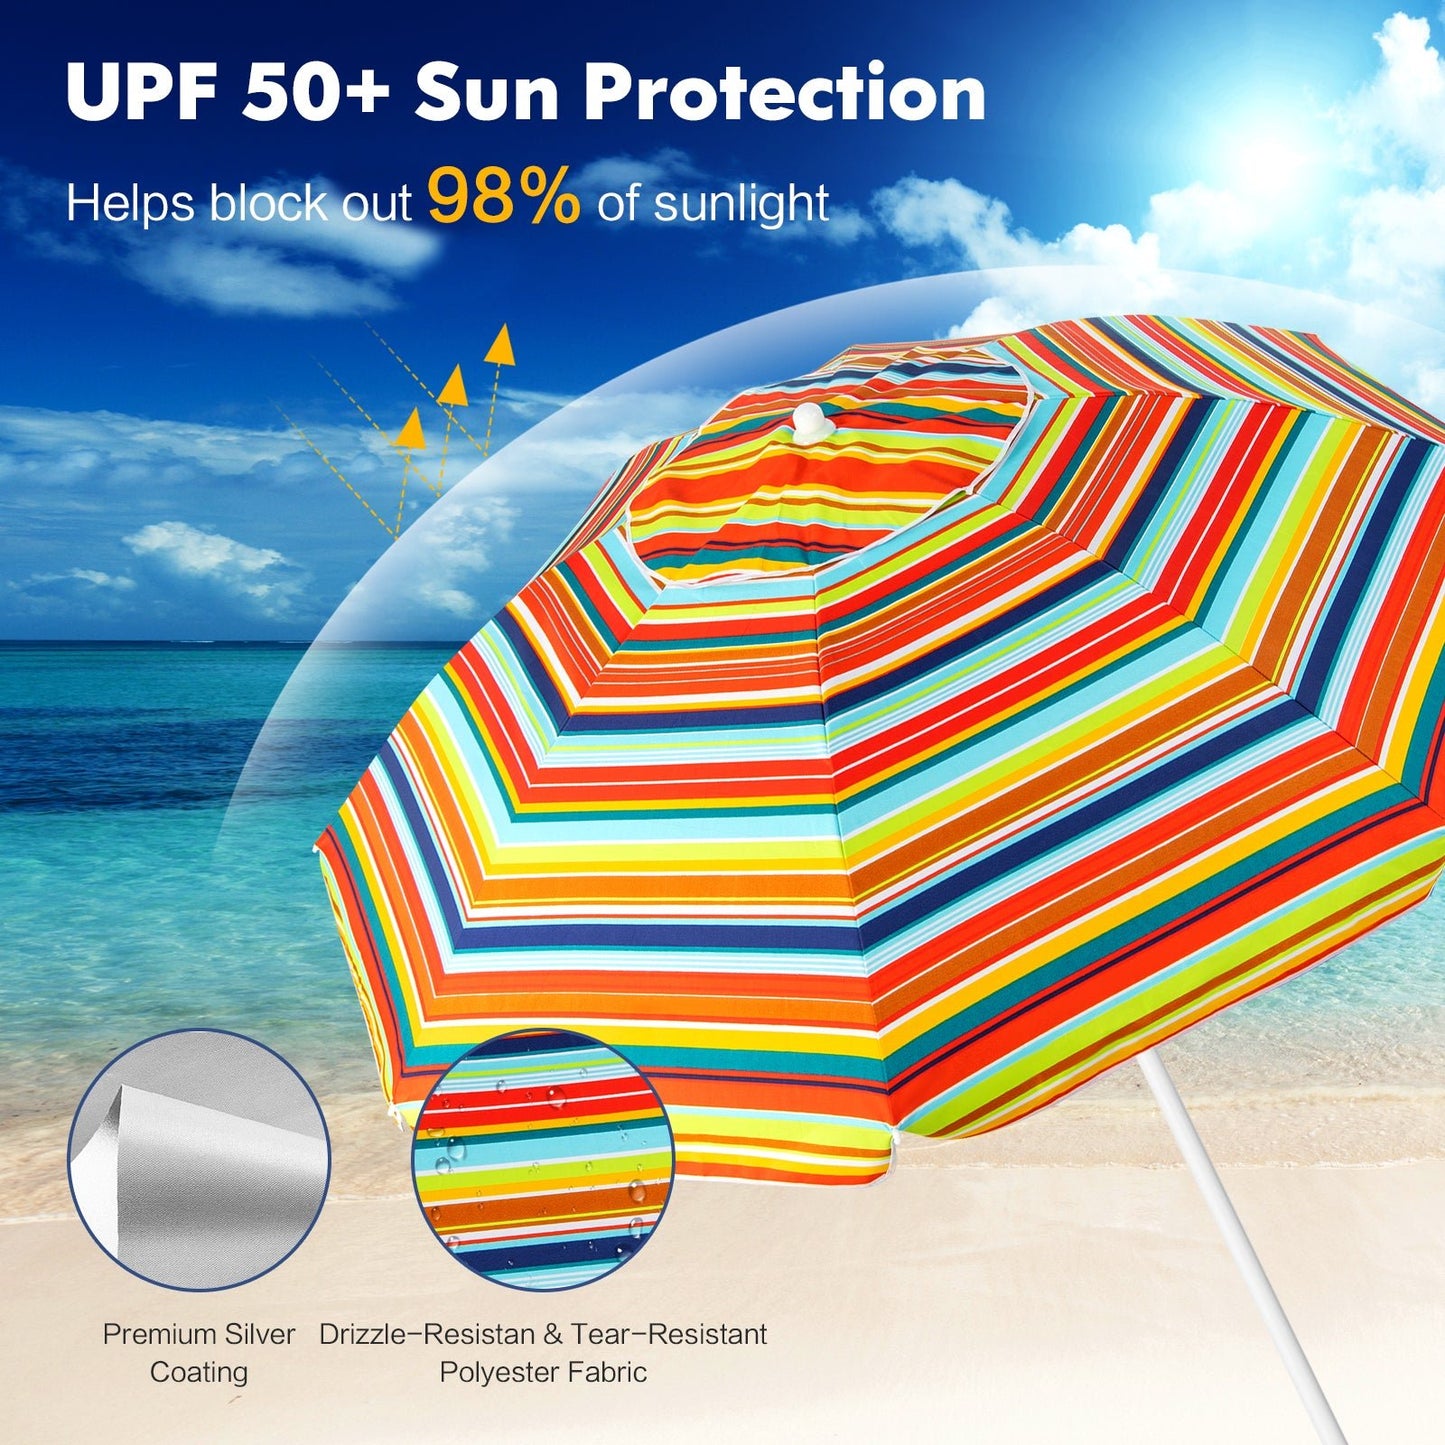 6.5 Feet Patio Beach Umbrella with Waterproof Polyester Fabric - Gallery Canada